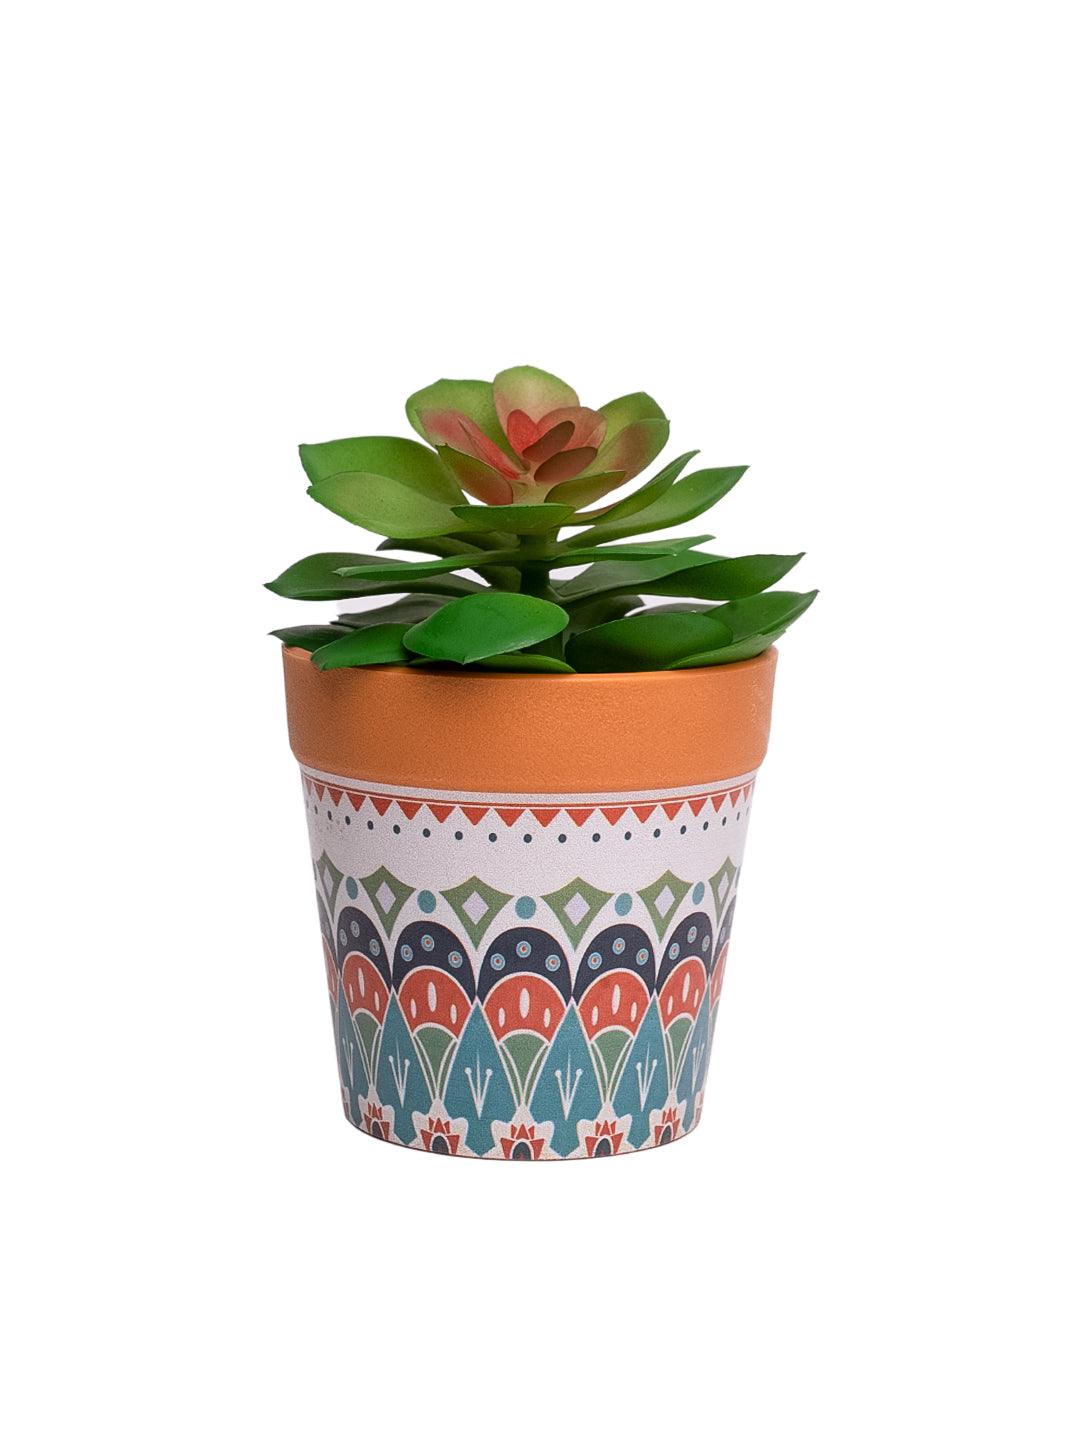 VON CASA Artificial Potted Plant - Mandala Style - MARKET99